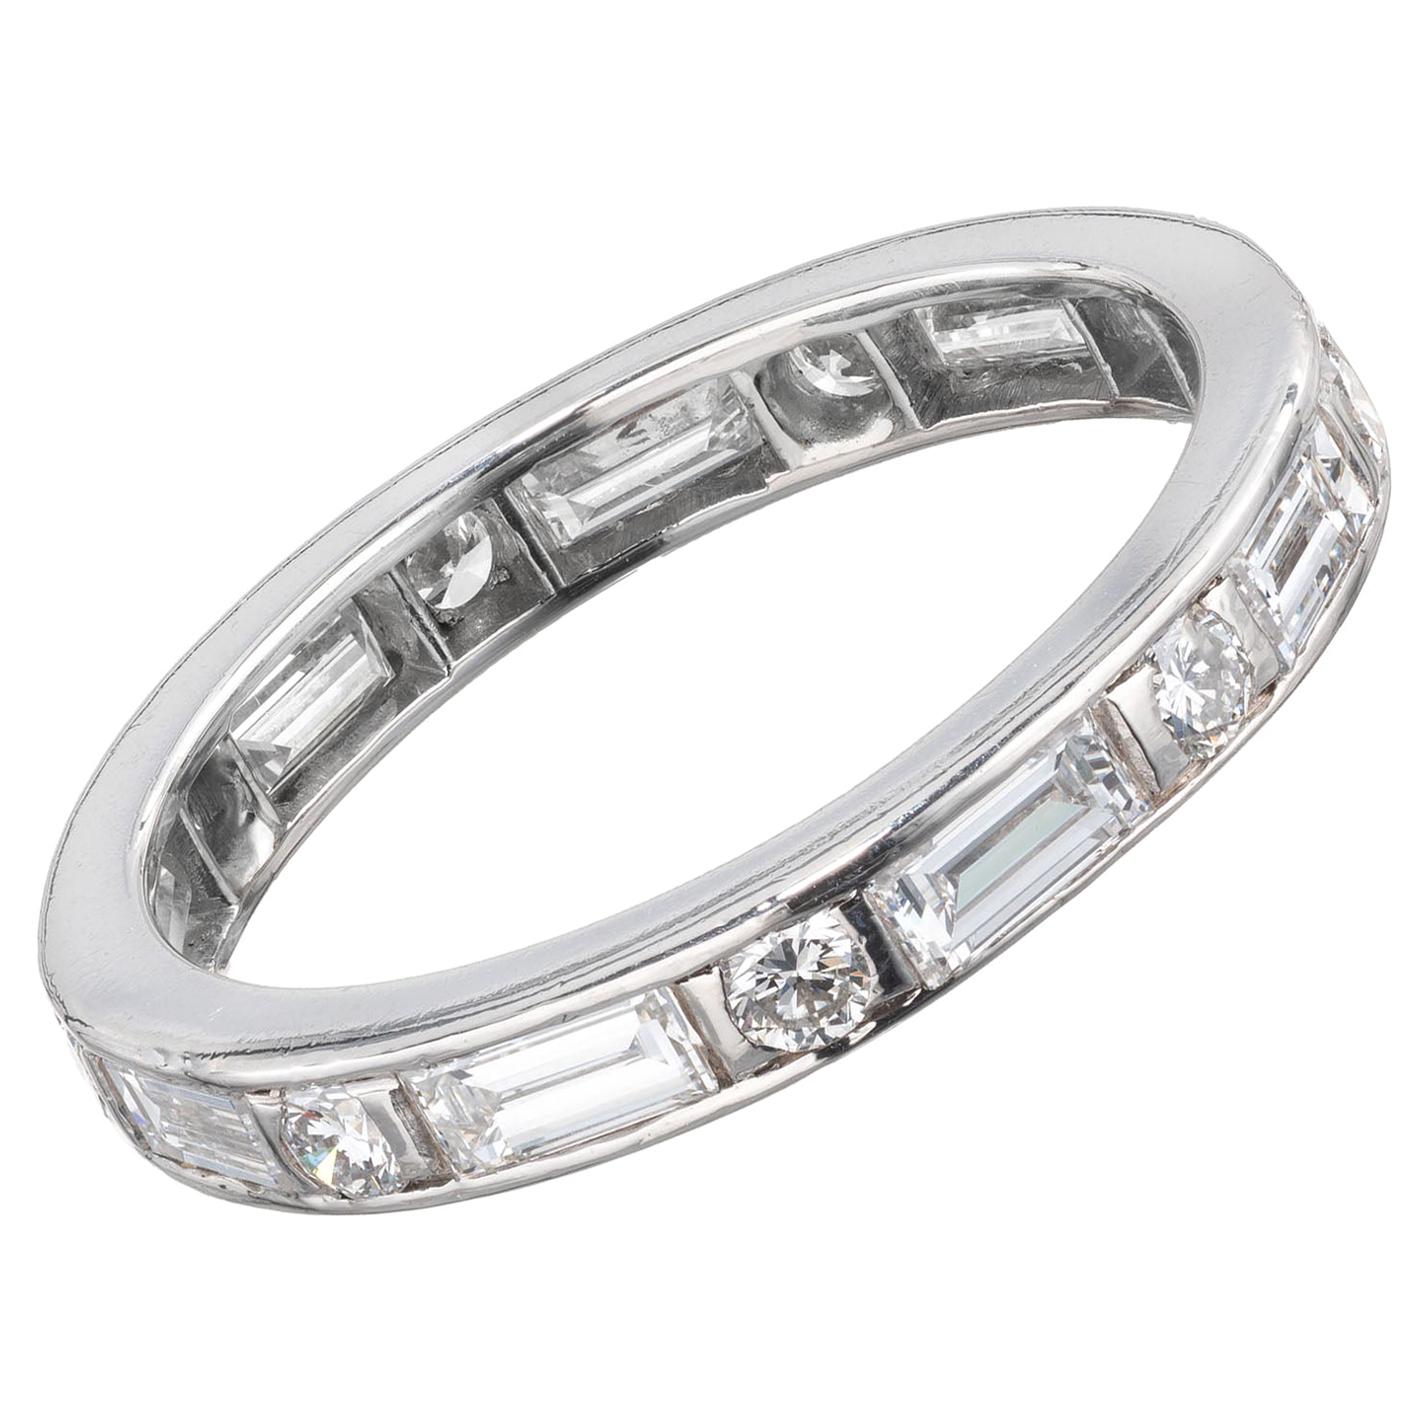 1.27 Carat Diamond Platinum Wedding Band Ring